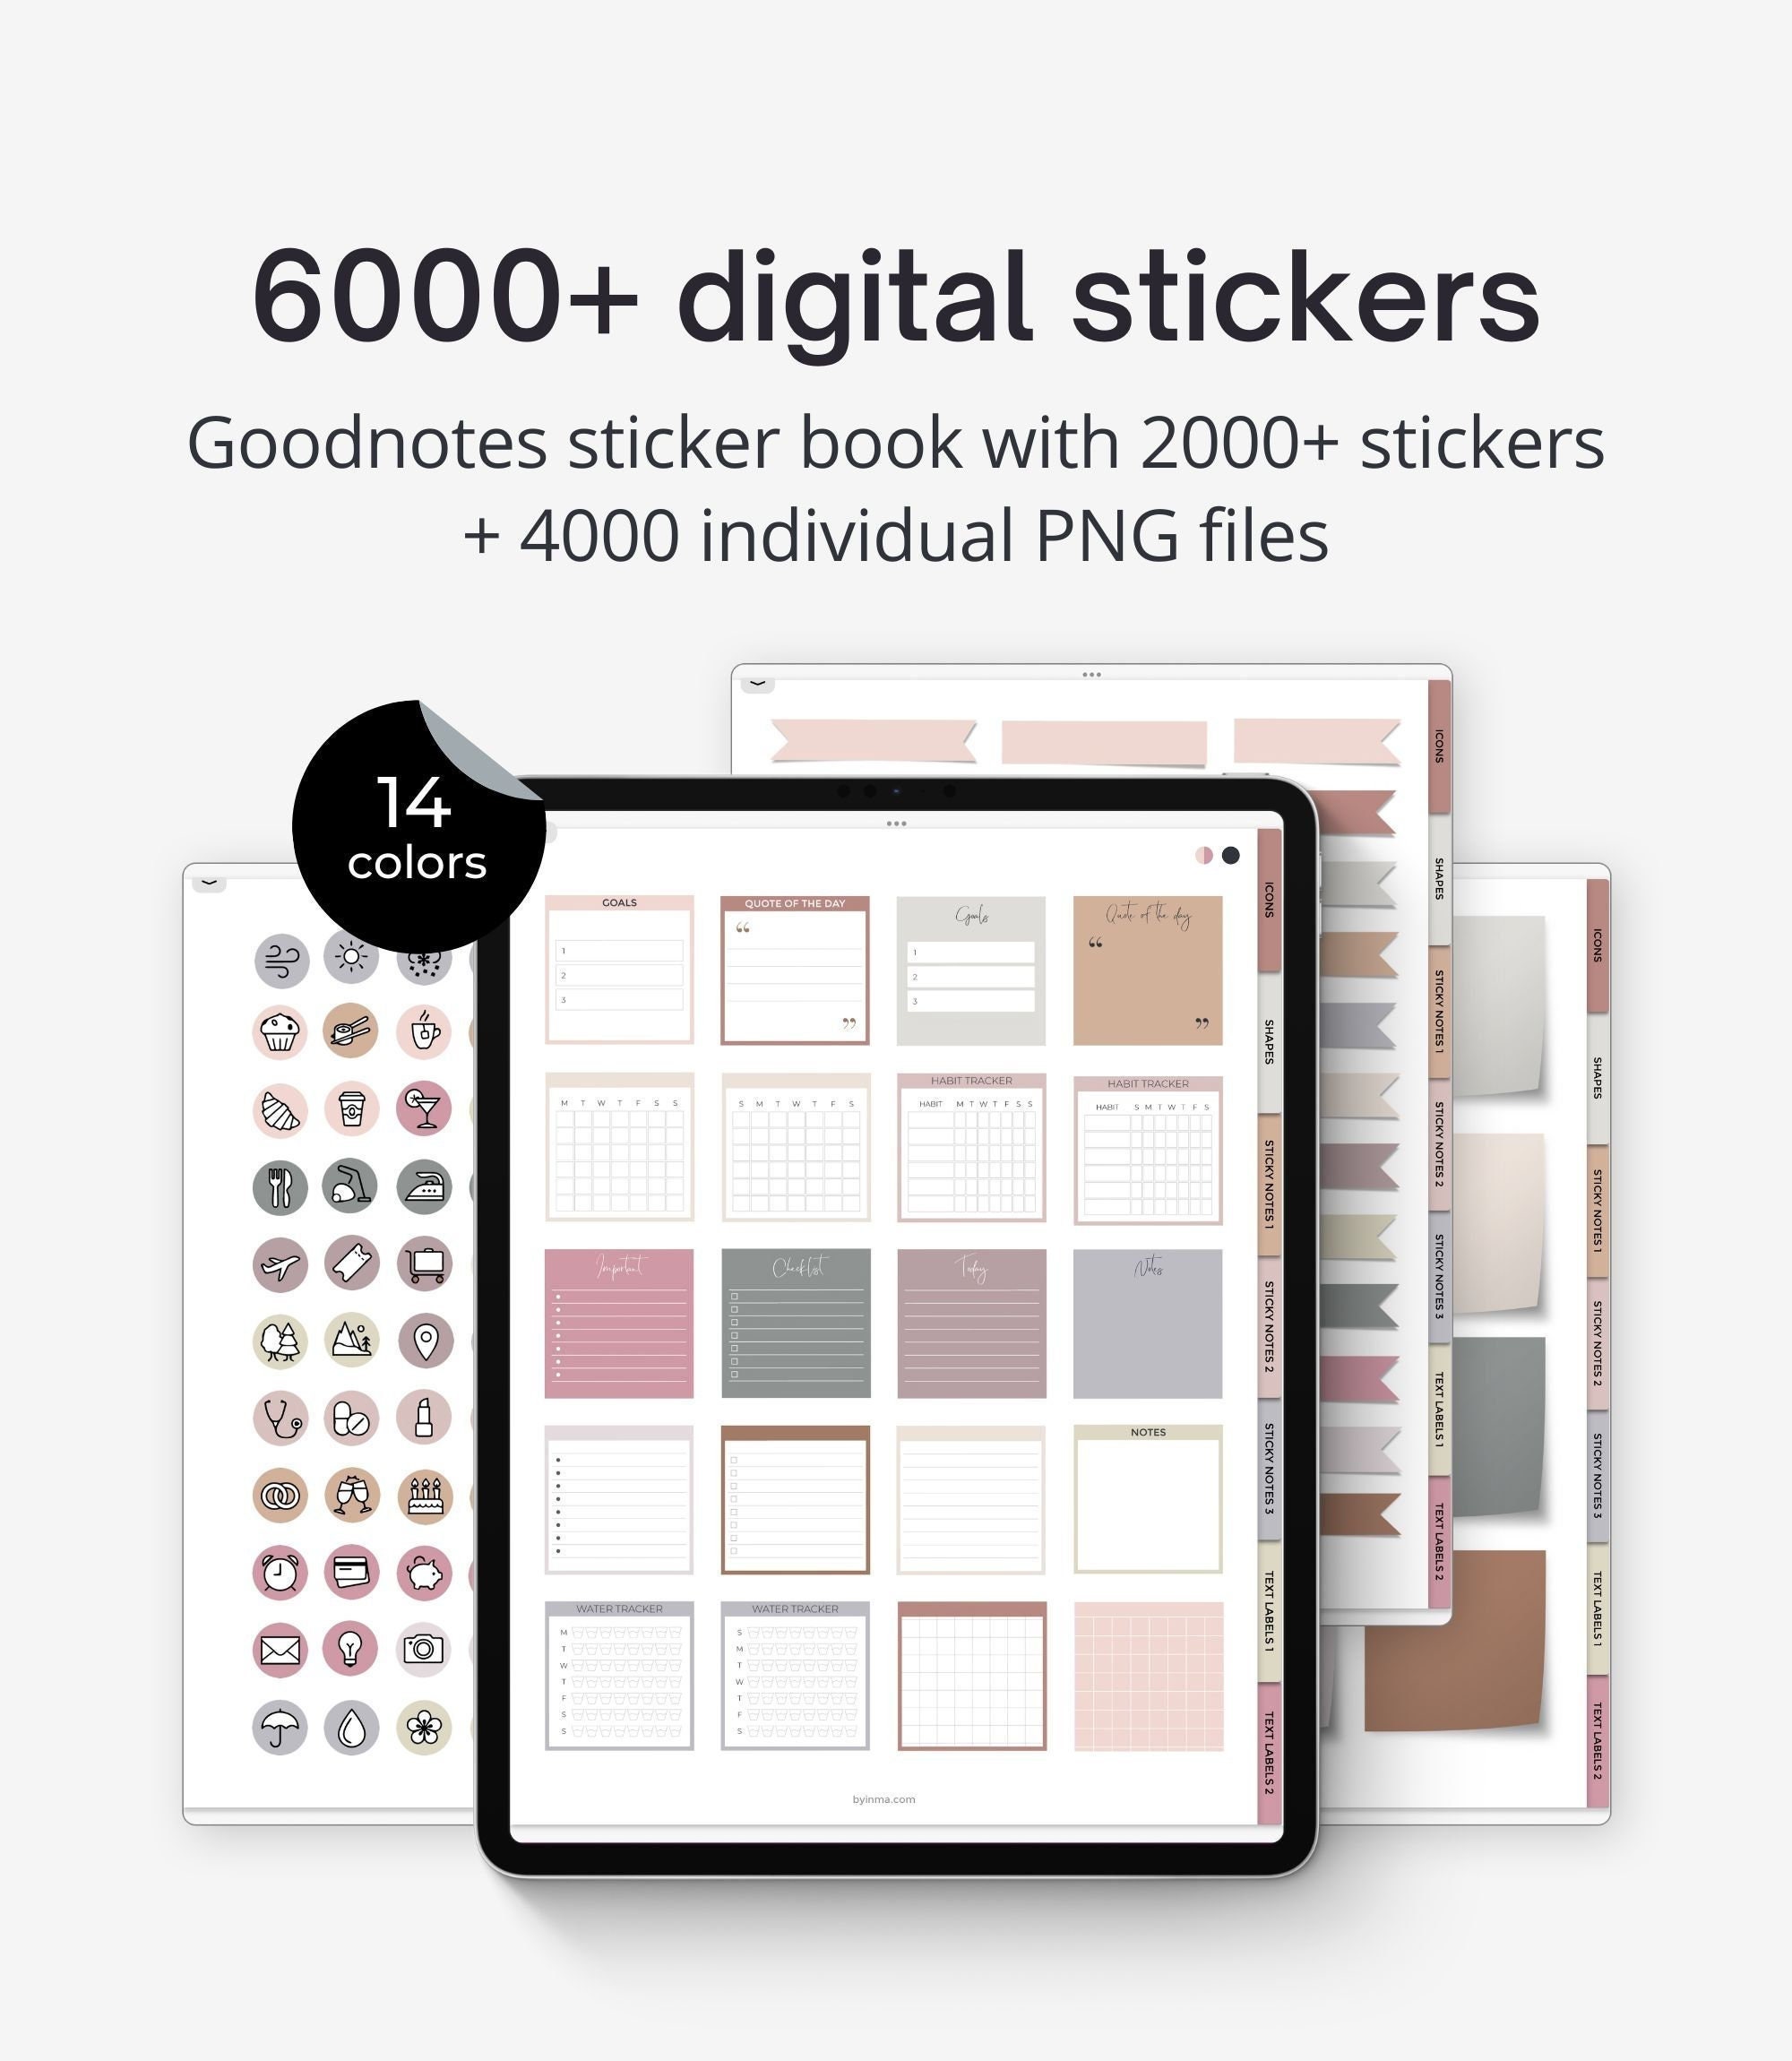 Digital Reading Journal Stickers Digital Sticker Sheet -  Sweden